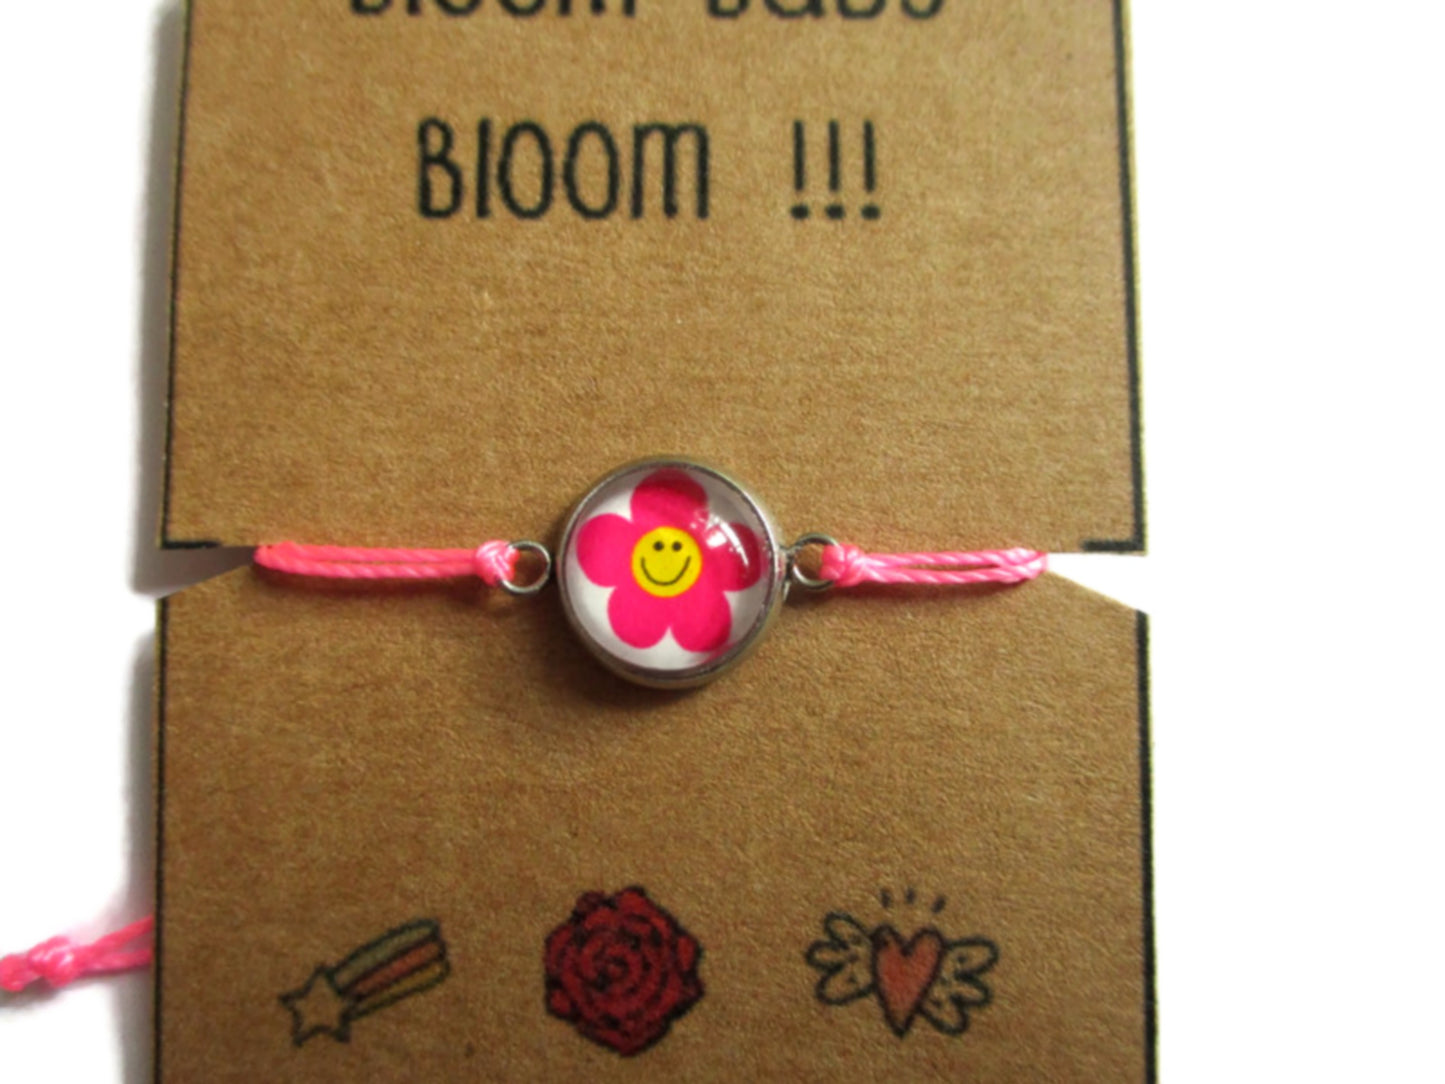 Pink smiley flower Wish bracelet